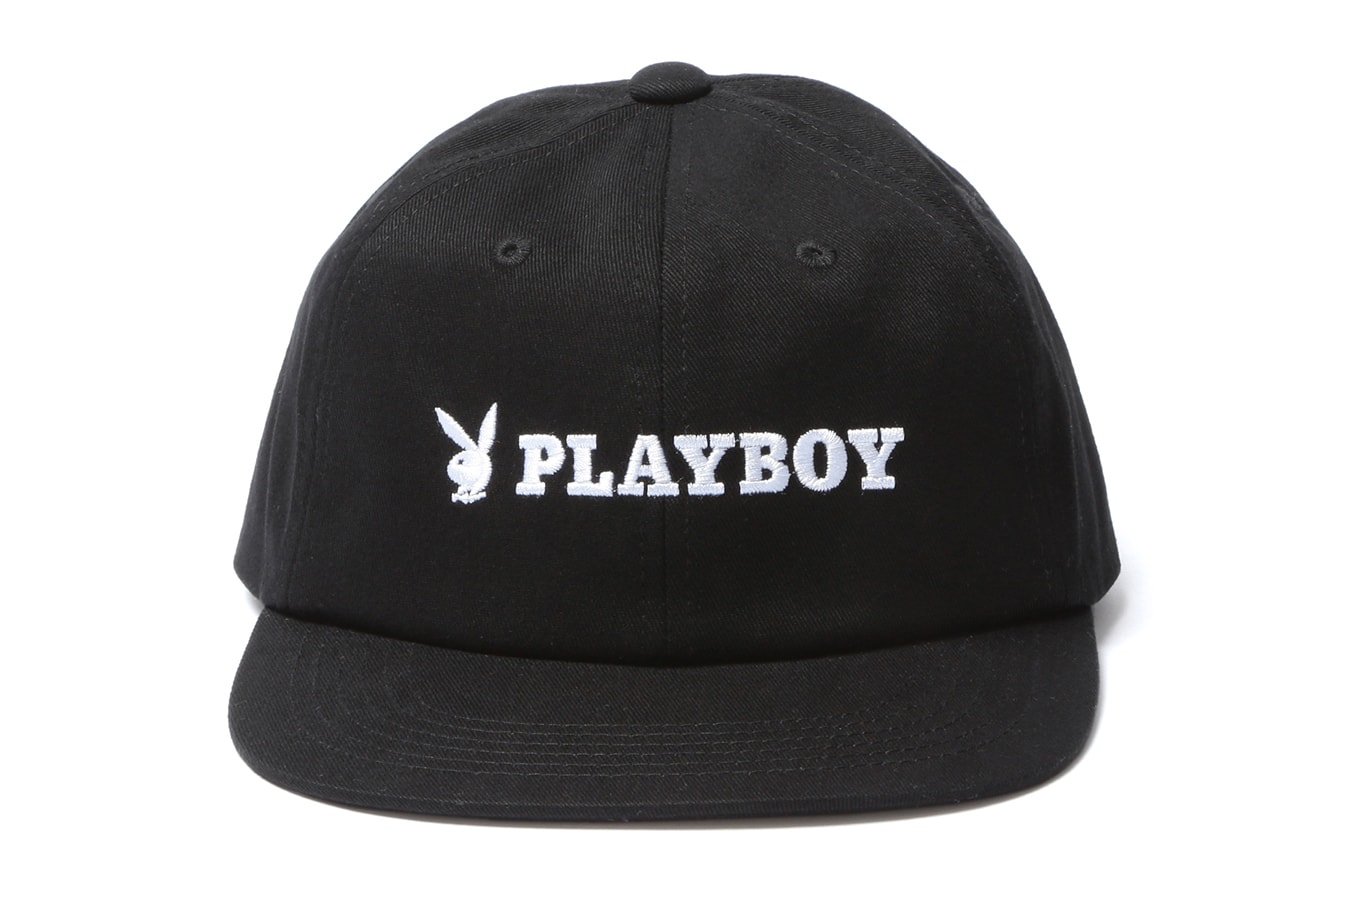 Playboy BEAMS T Collaborative Capsule Release Drop Harajuku Tokyo Playmate Logo Bunny